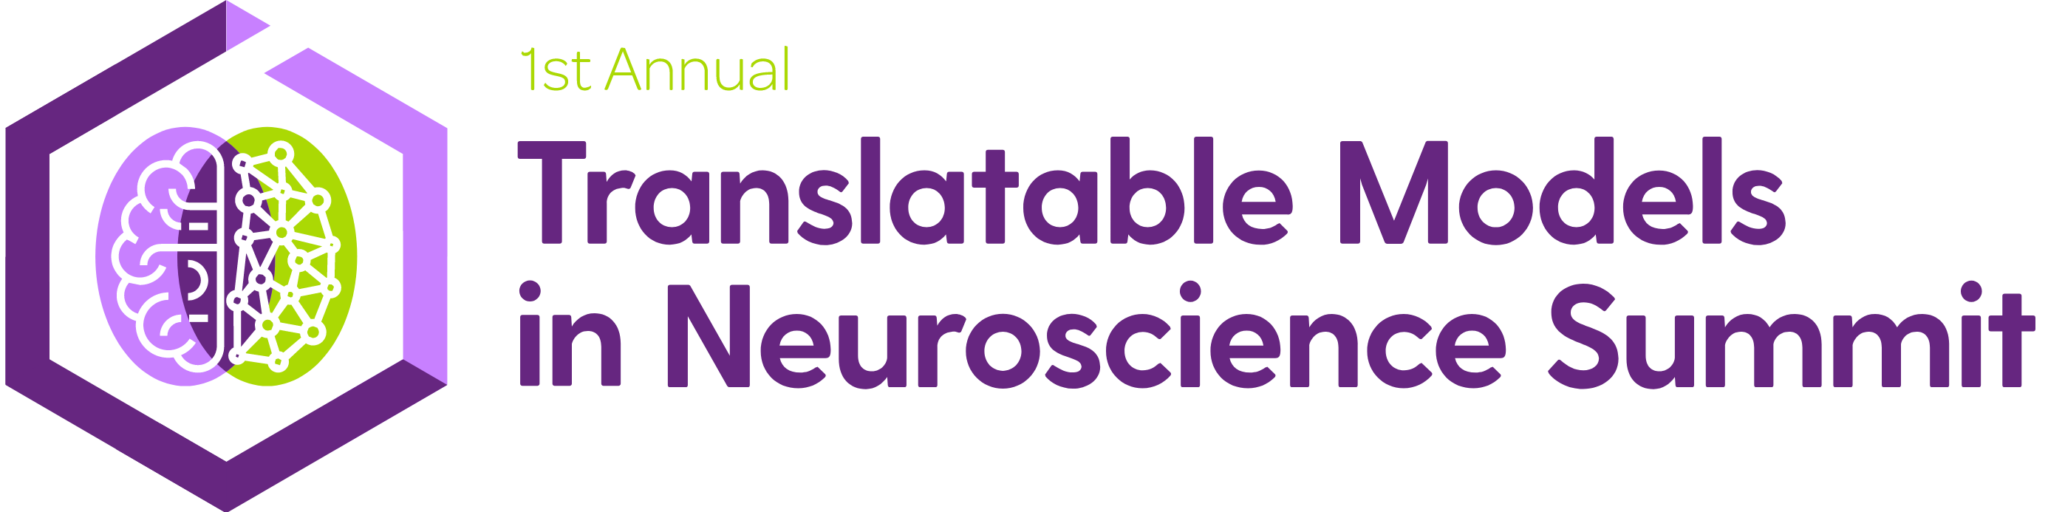 5756_Translatable_Models_in_Neuroscience_Logo-2-2048x512